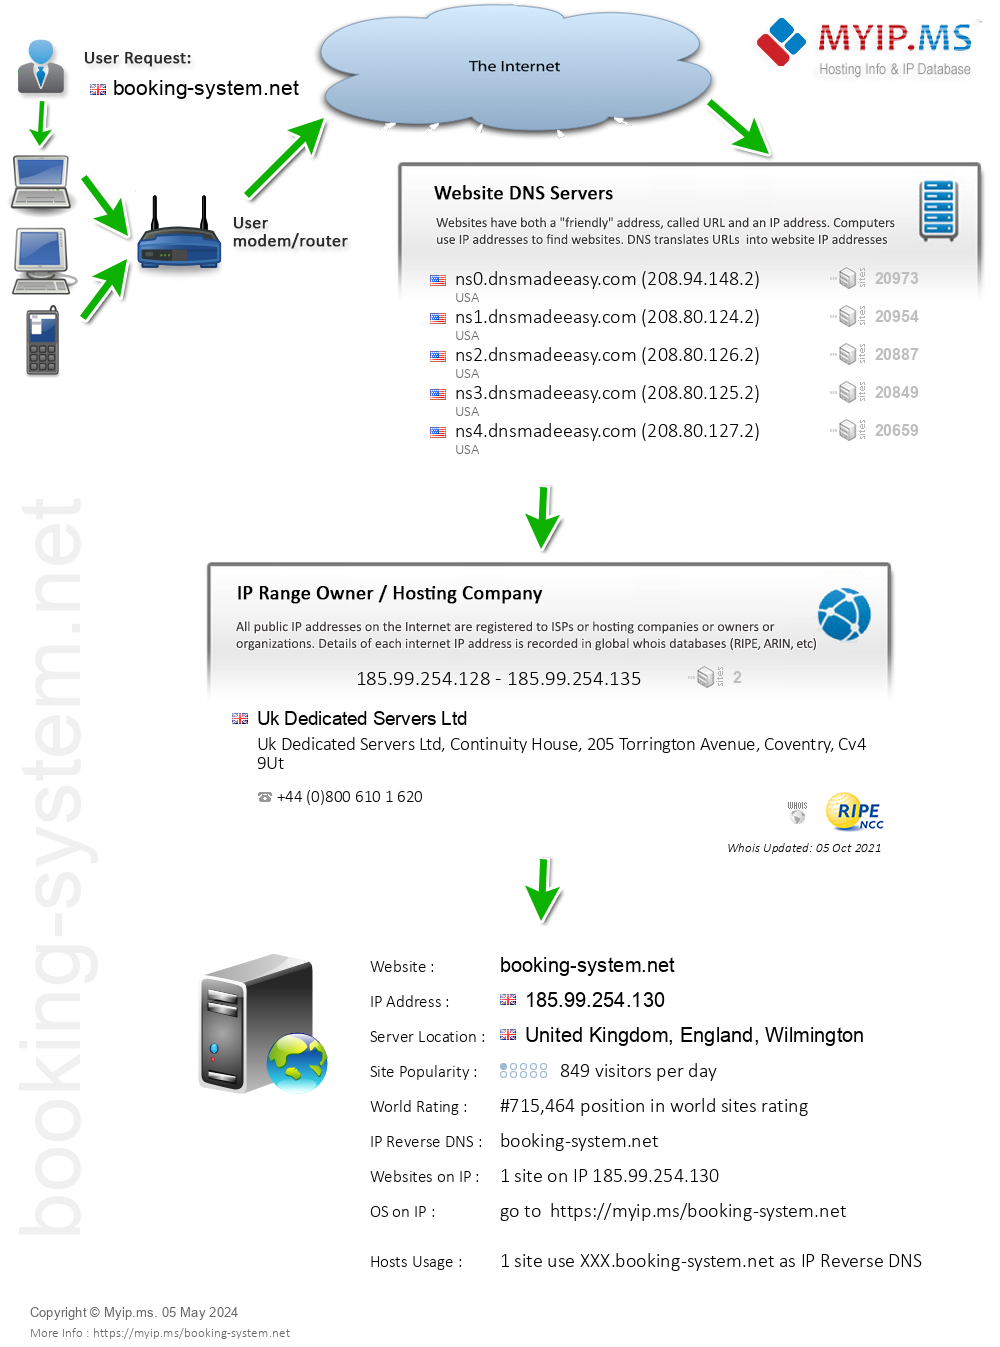 Booking-system.net - Website Hosting Visual IP Diagram